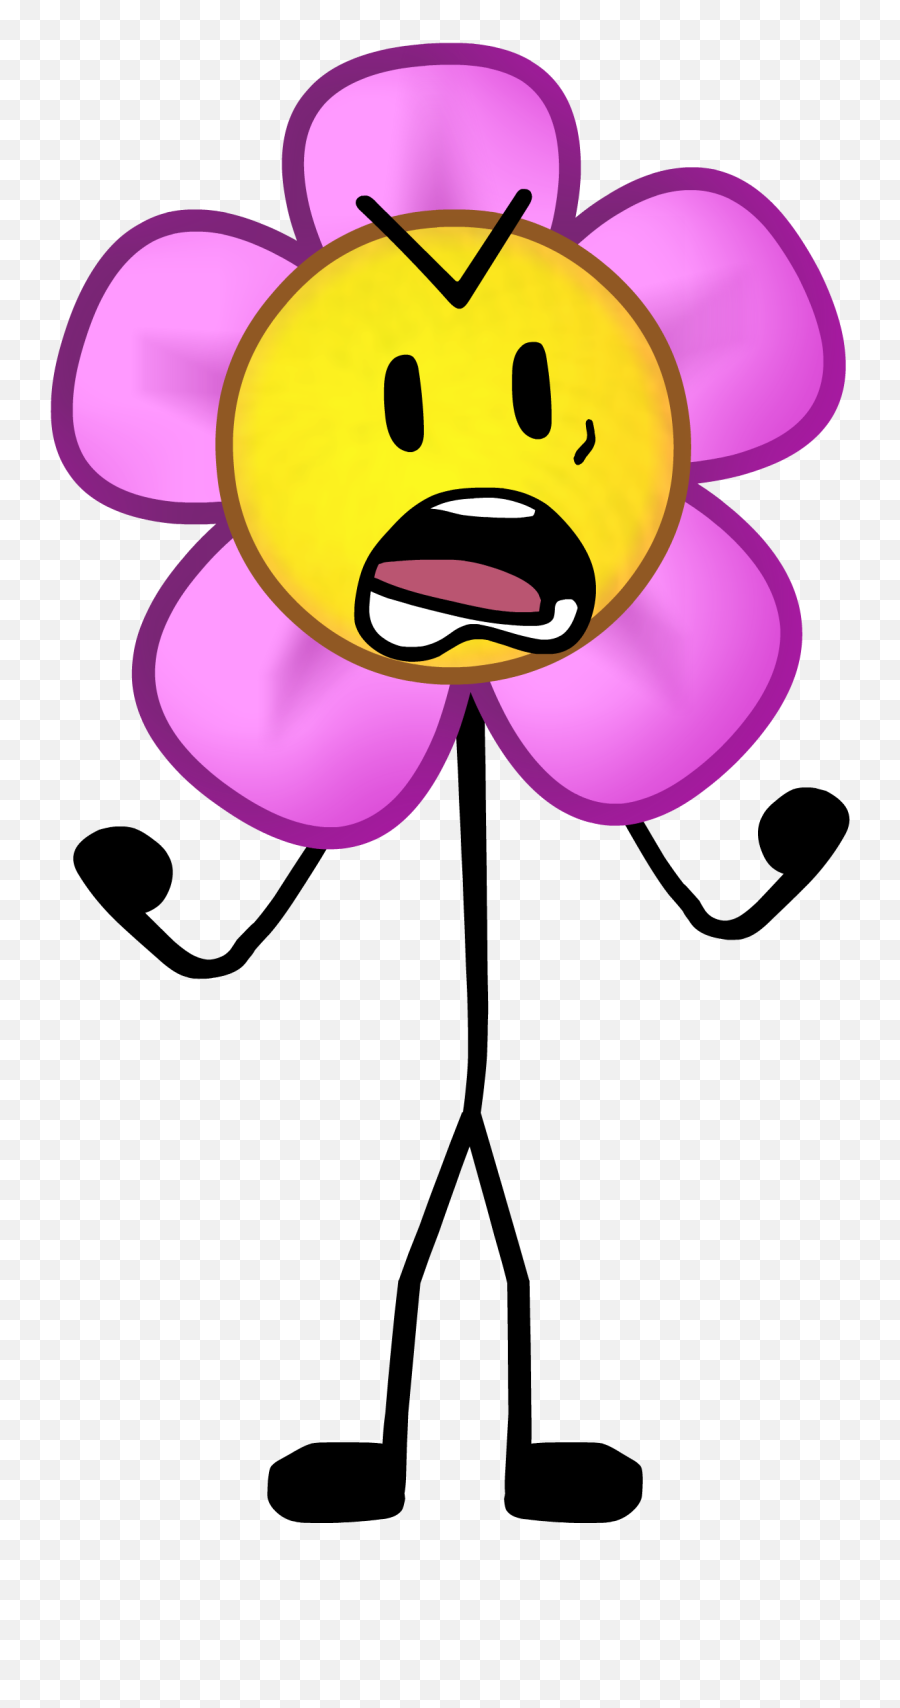 Flower Object Shows Community Fandom Emoji,Wilted Flower Emoji Meaning